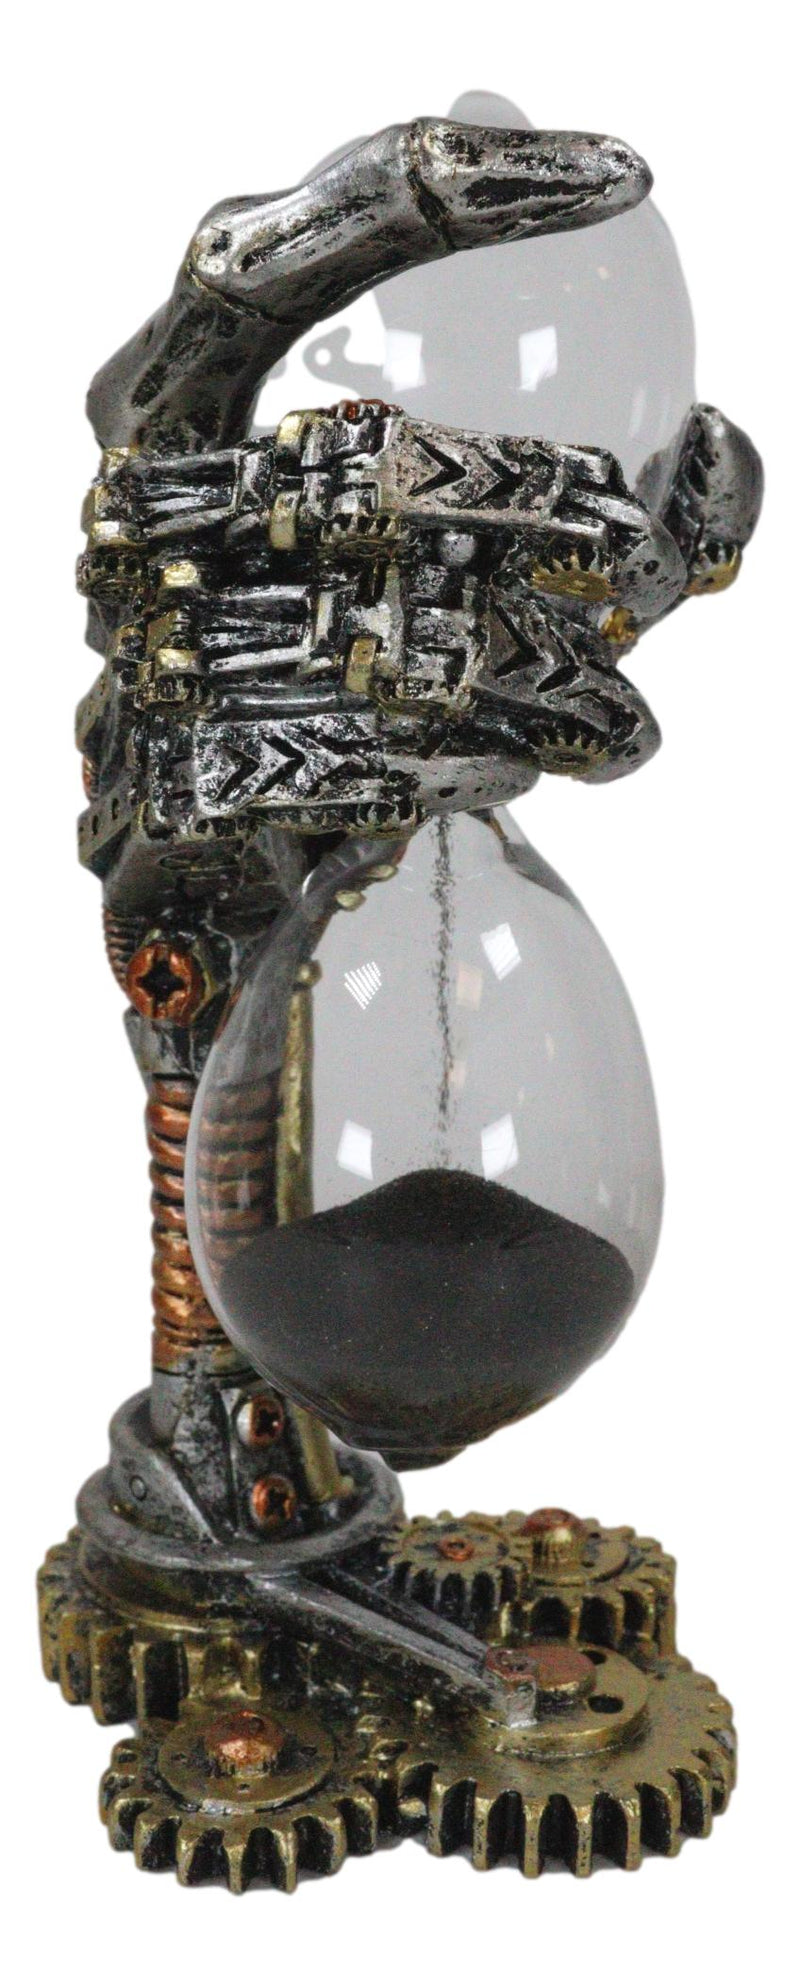 Steampunk Chronambulator Time Warp Machine With Painted Clockwork Desktop  Clock 